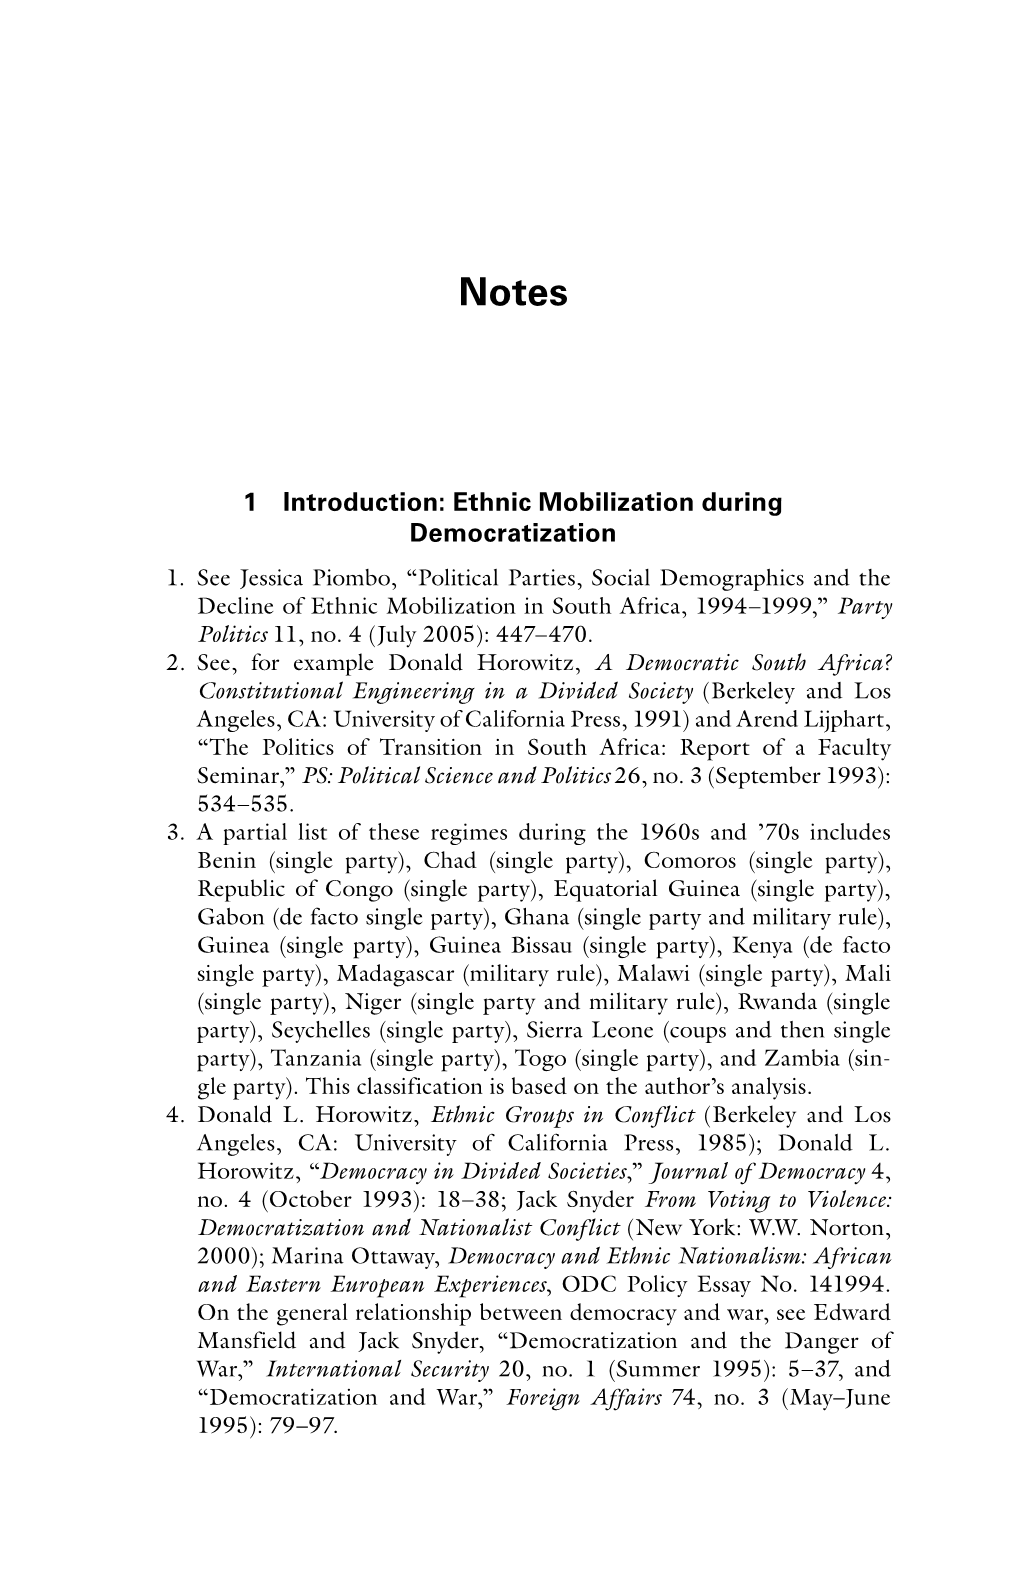 1 Introduction: Ethnic Mobilization During Democratization 1